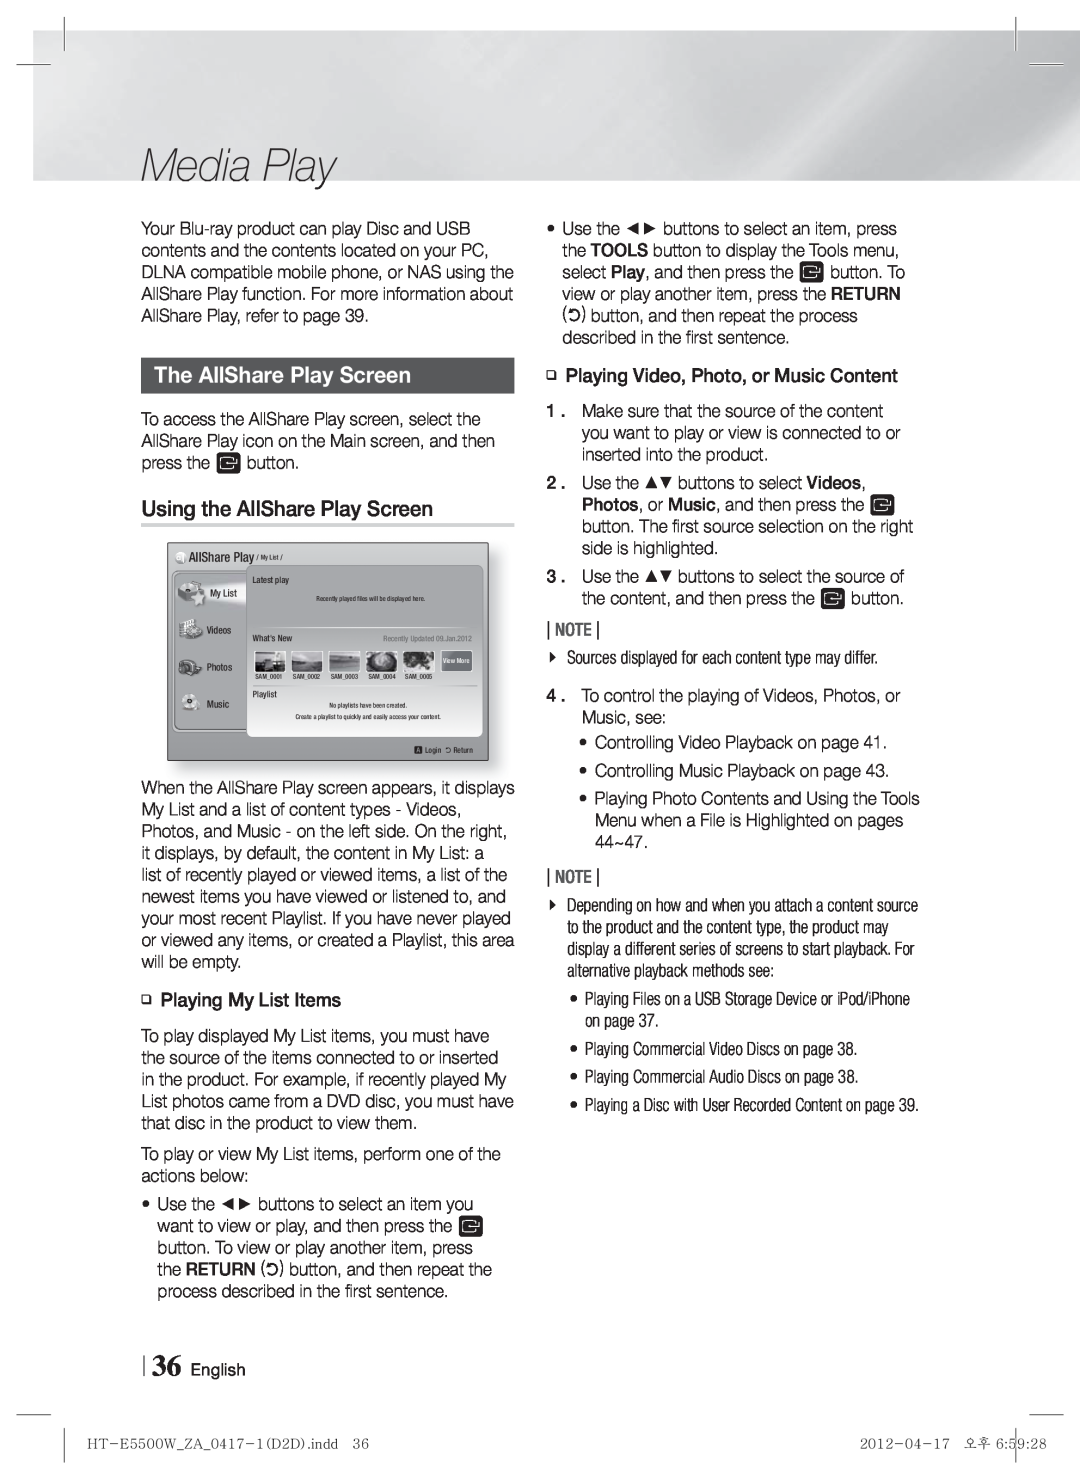 Samsung HT-E550 user manual Media Play, The AllShare Play Screen, Note 